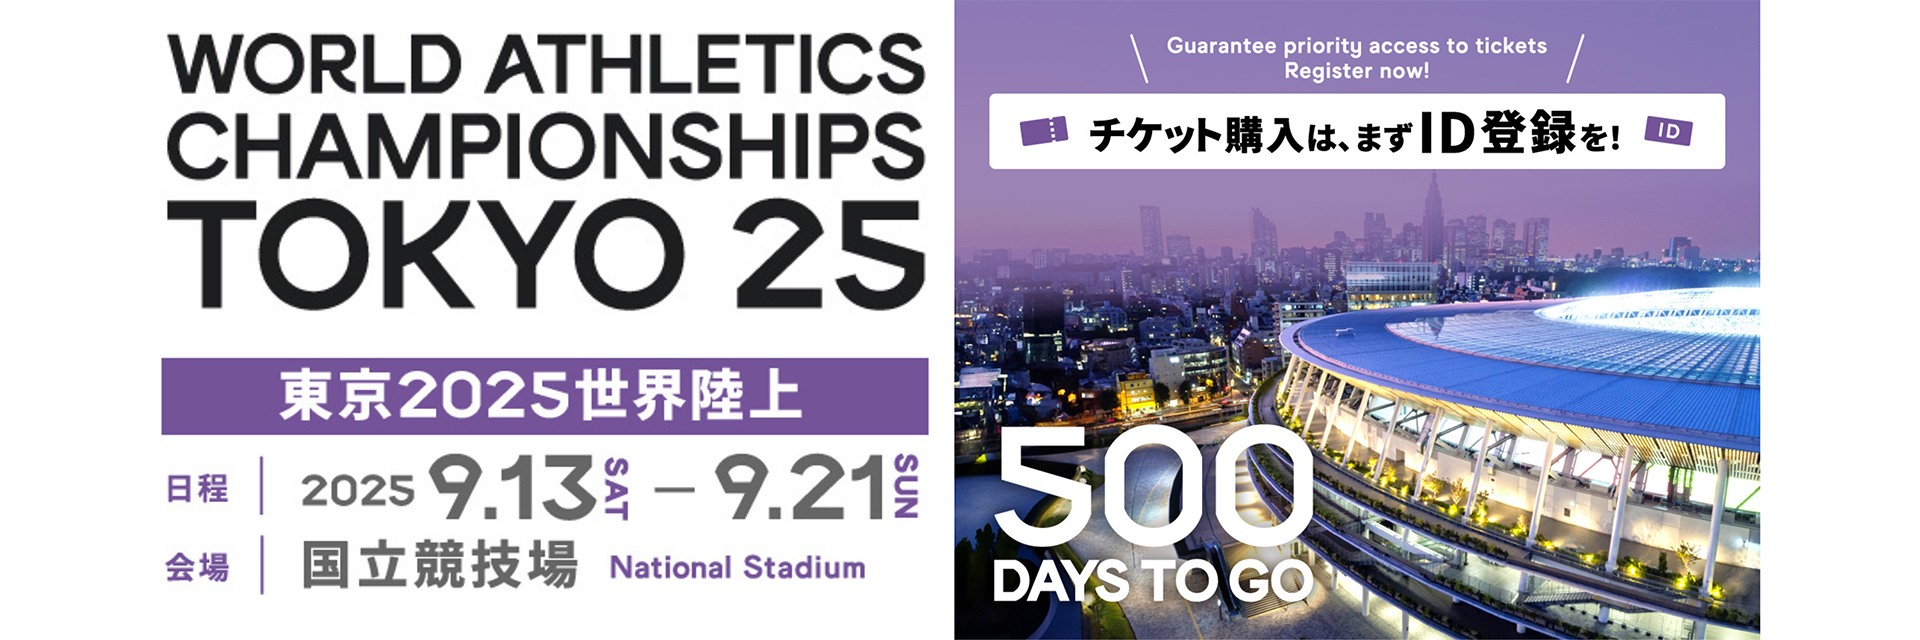 [Tokyo 2025 World Athletics Foundation] 500 Days to Go! 500 days left until the event!